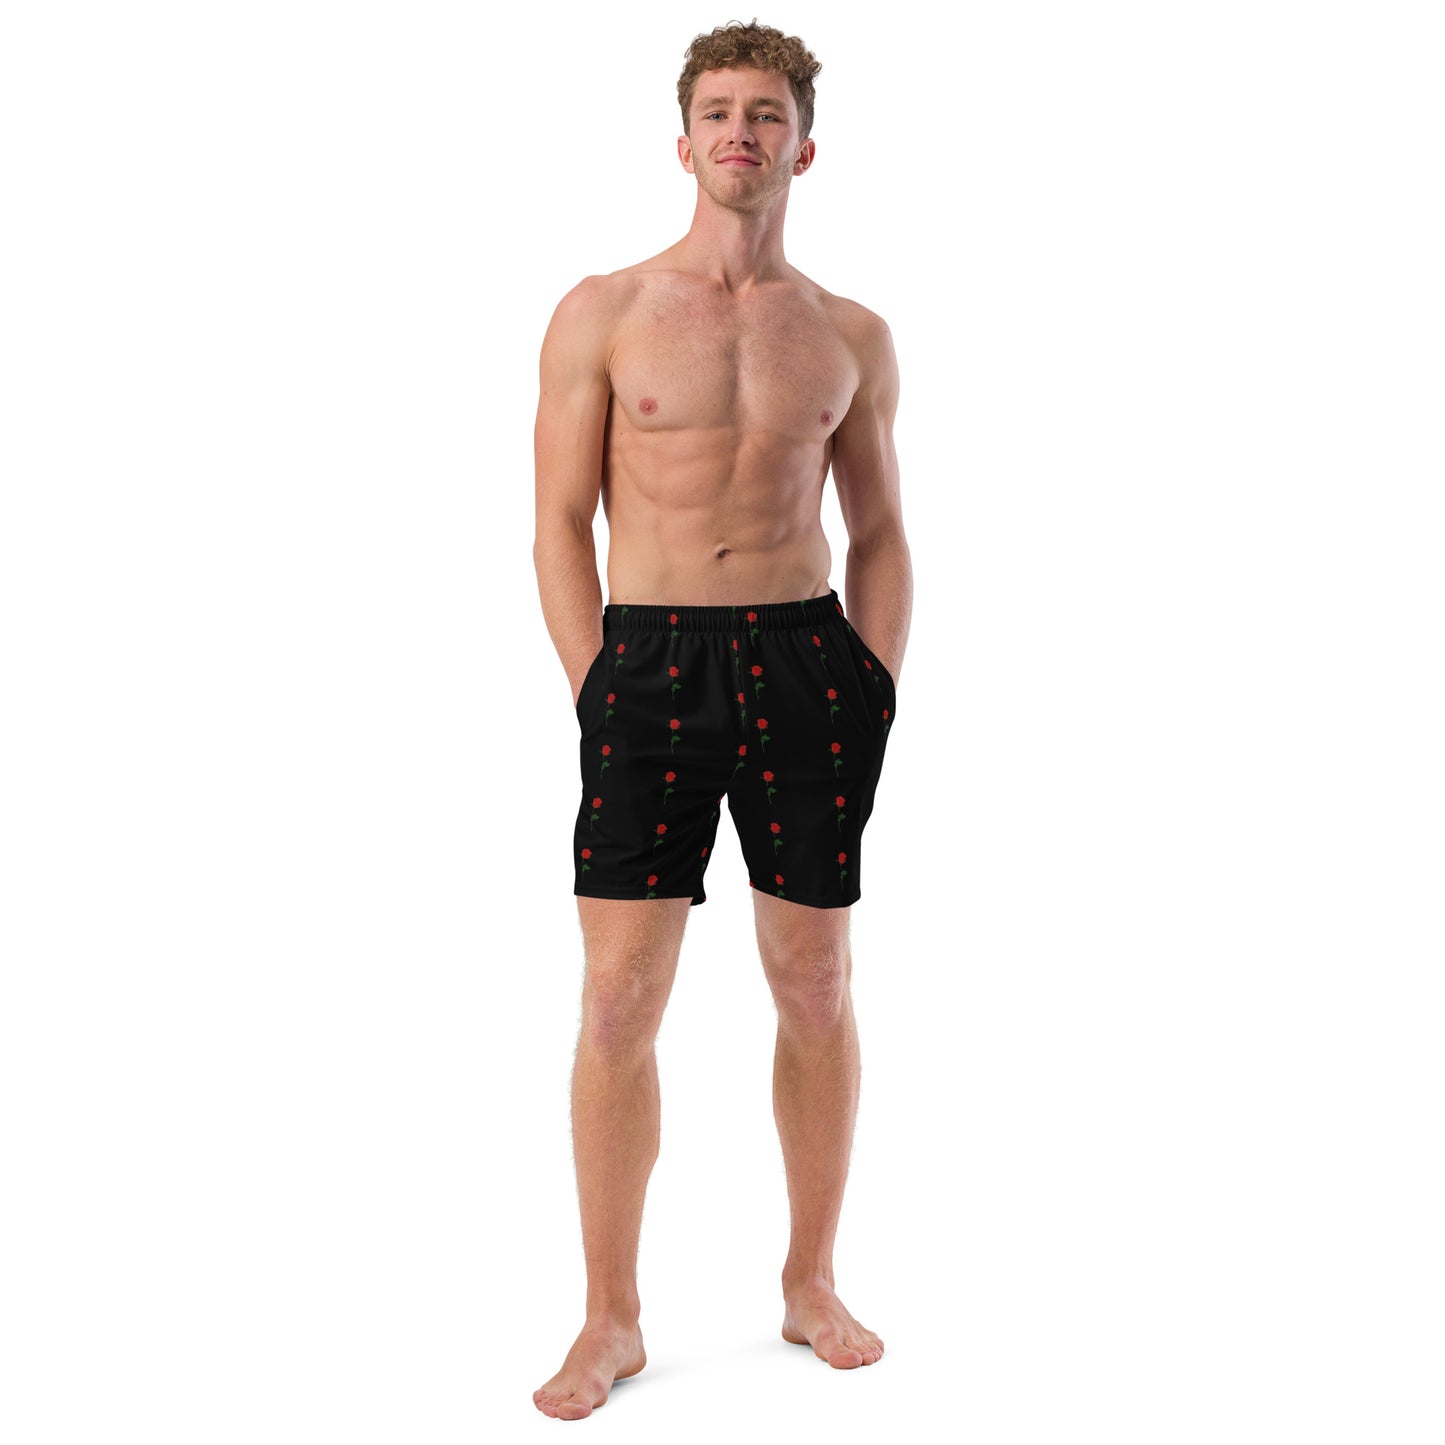 Adonis-Creations - Men's all over print swim trunks